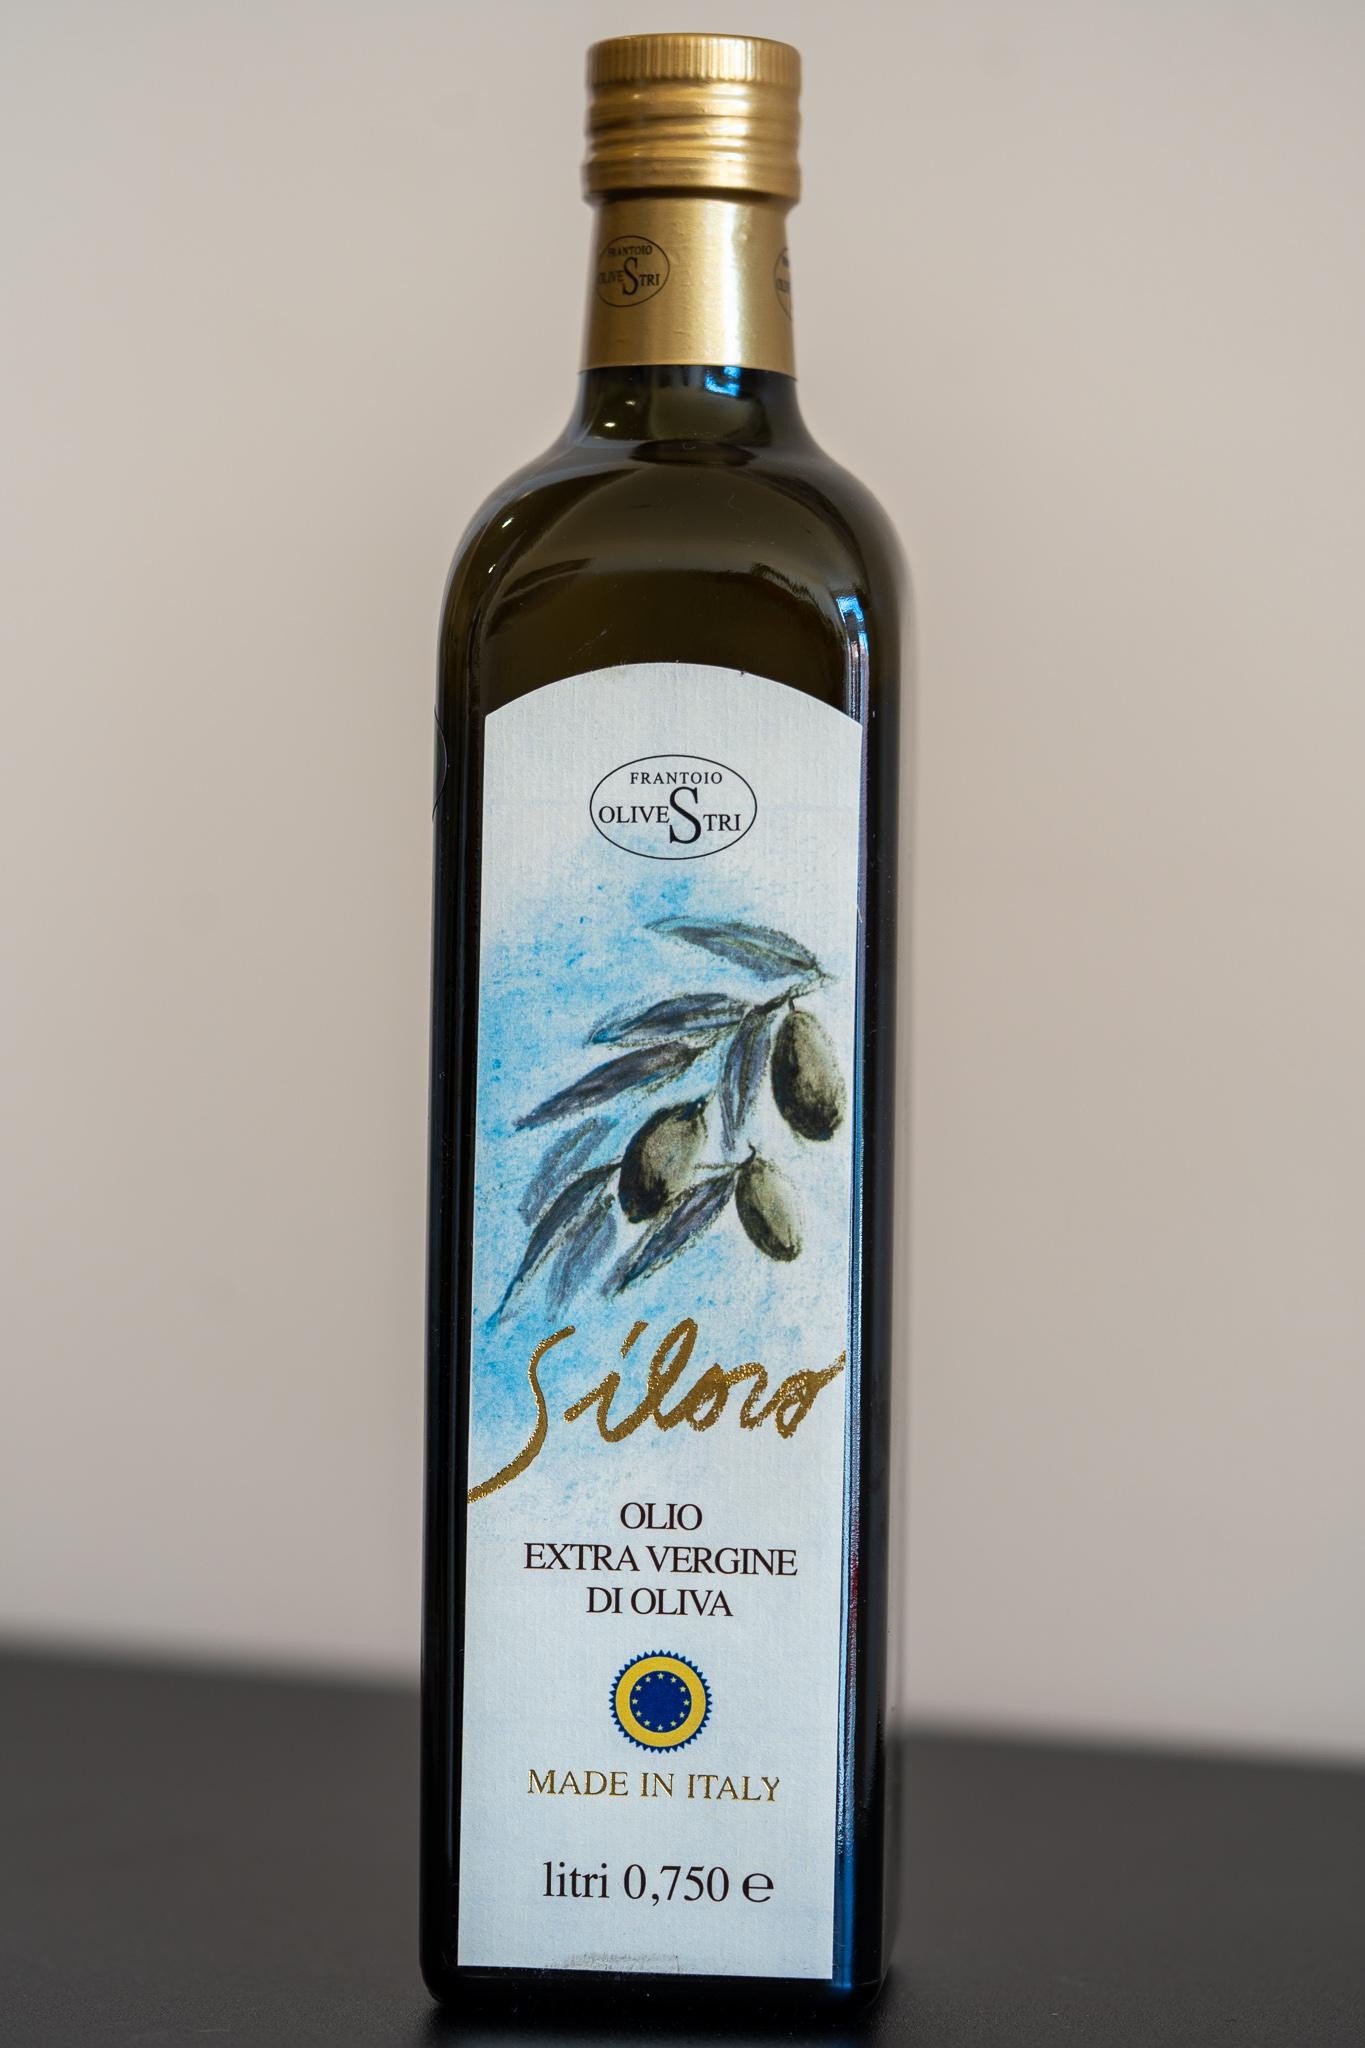 Olivestri Siloro